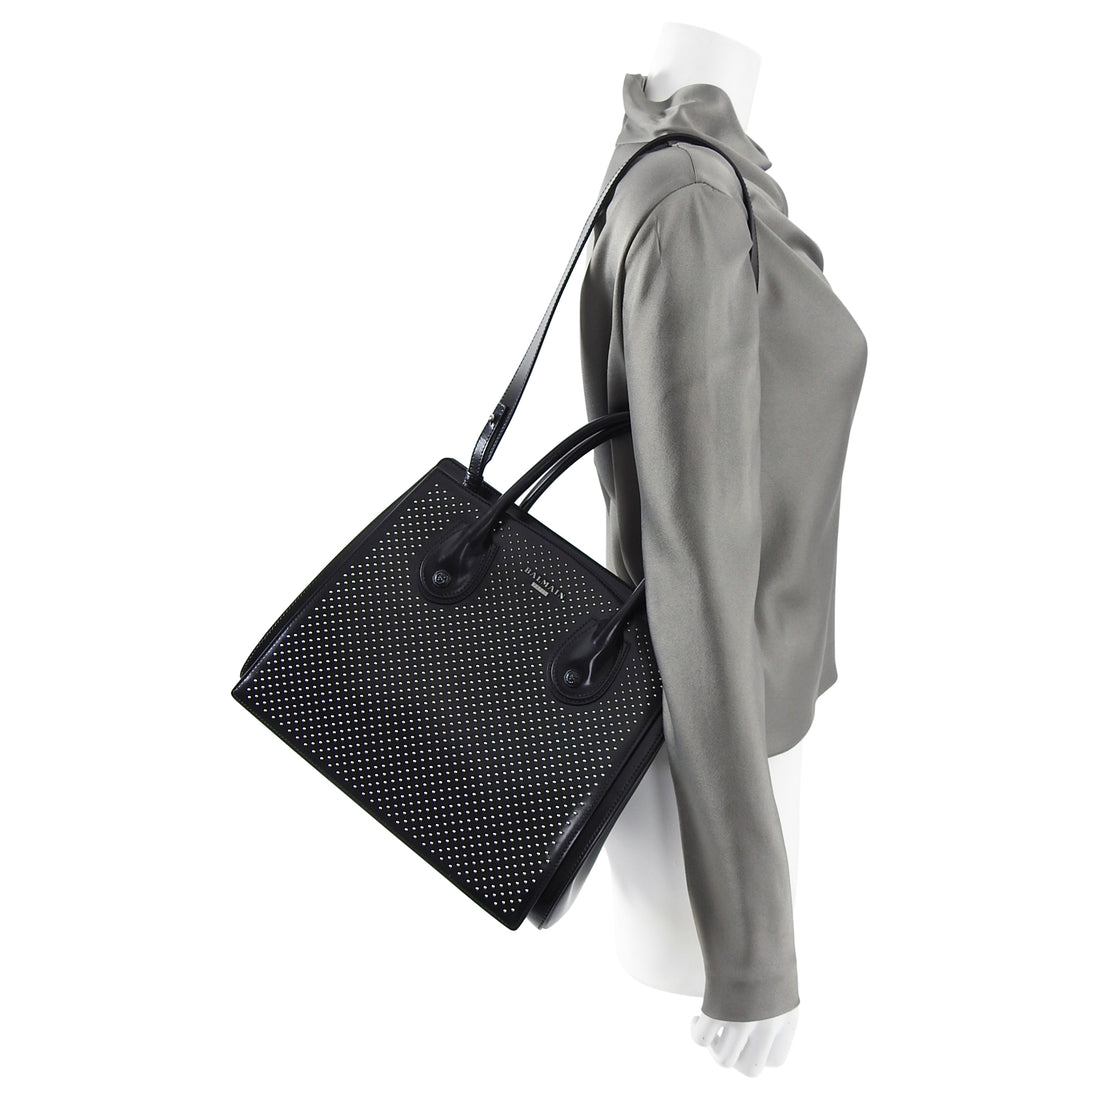 Balmain Black Stud Leather Top Handle Satchel Bag